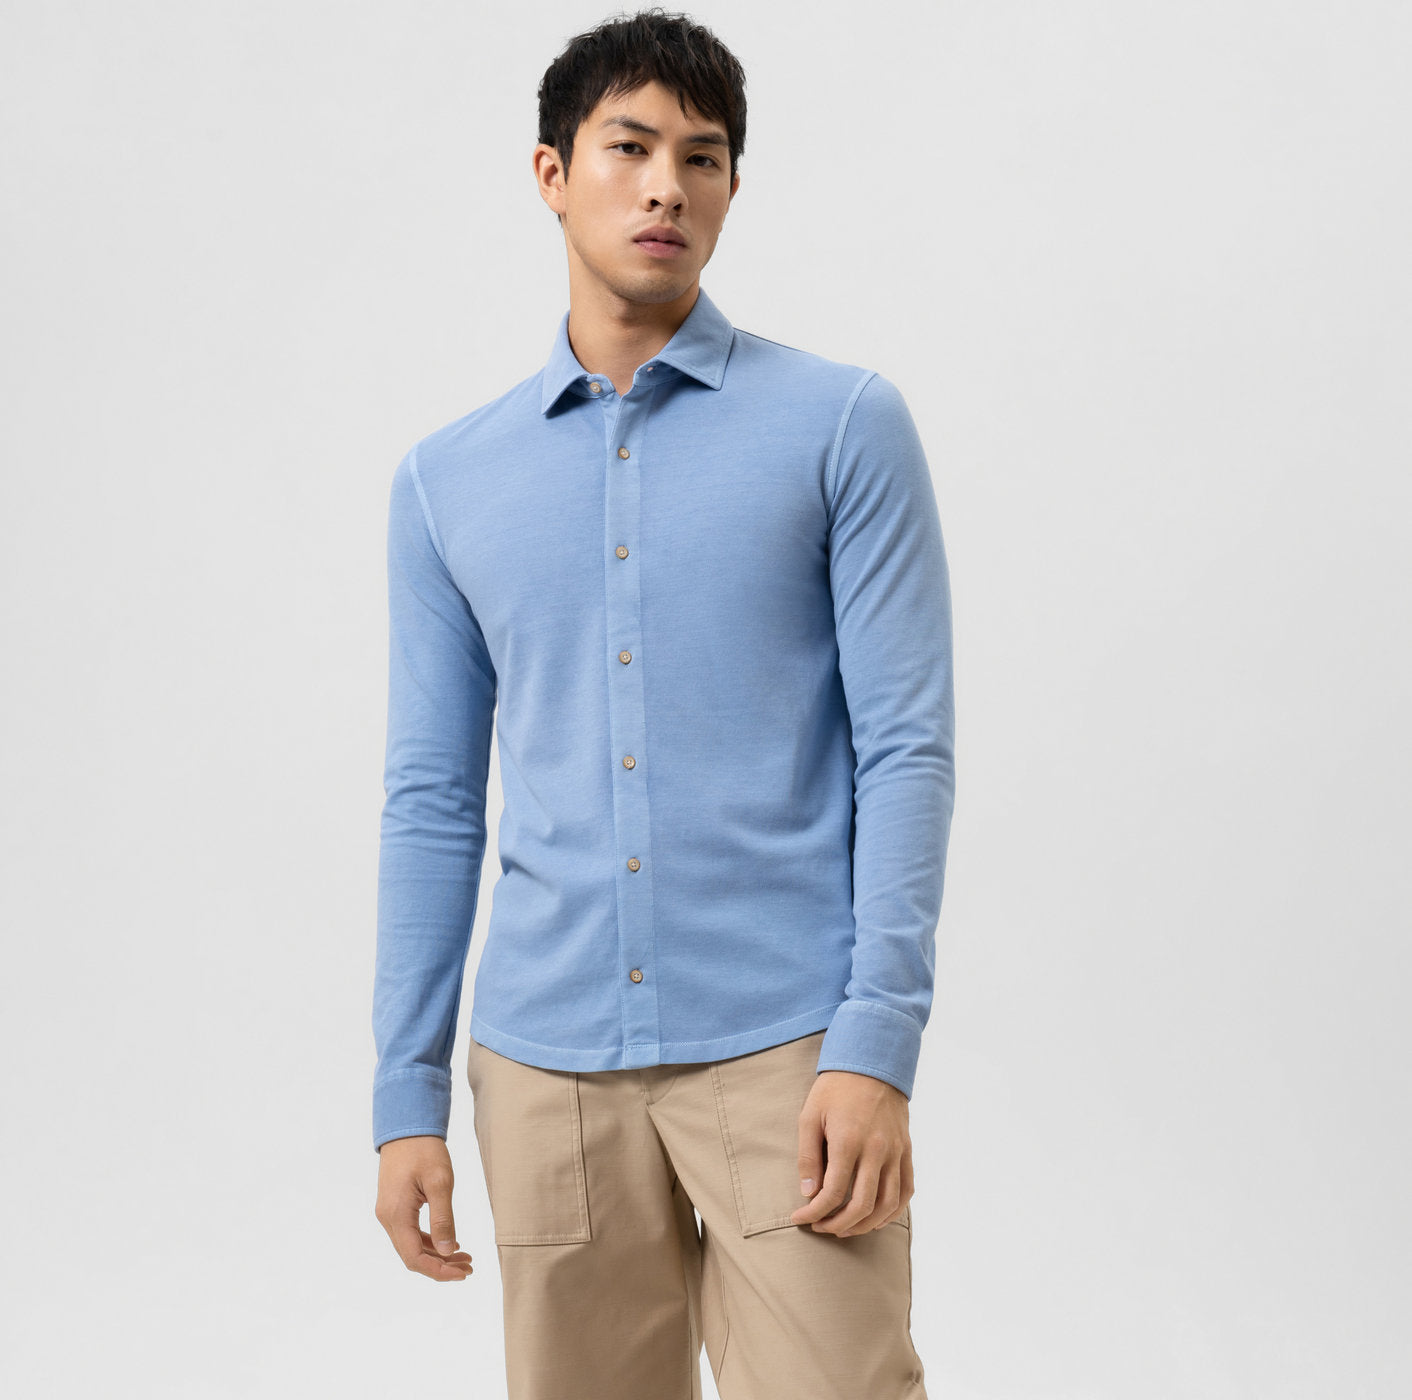 Jean shirt - Blue - Modern fit - Casual